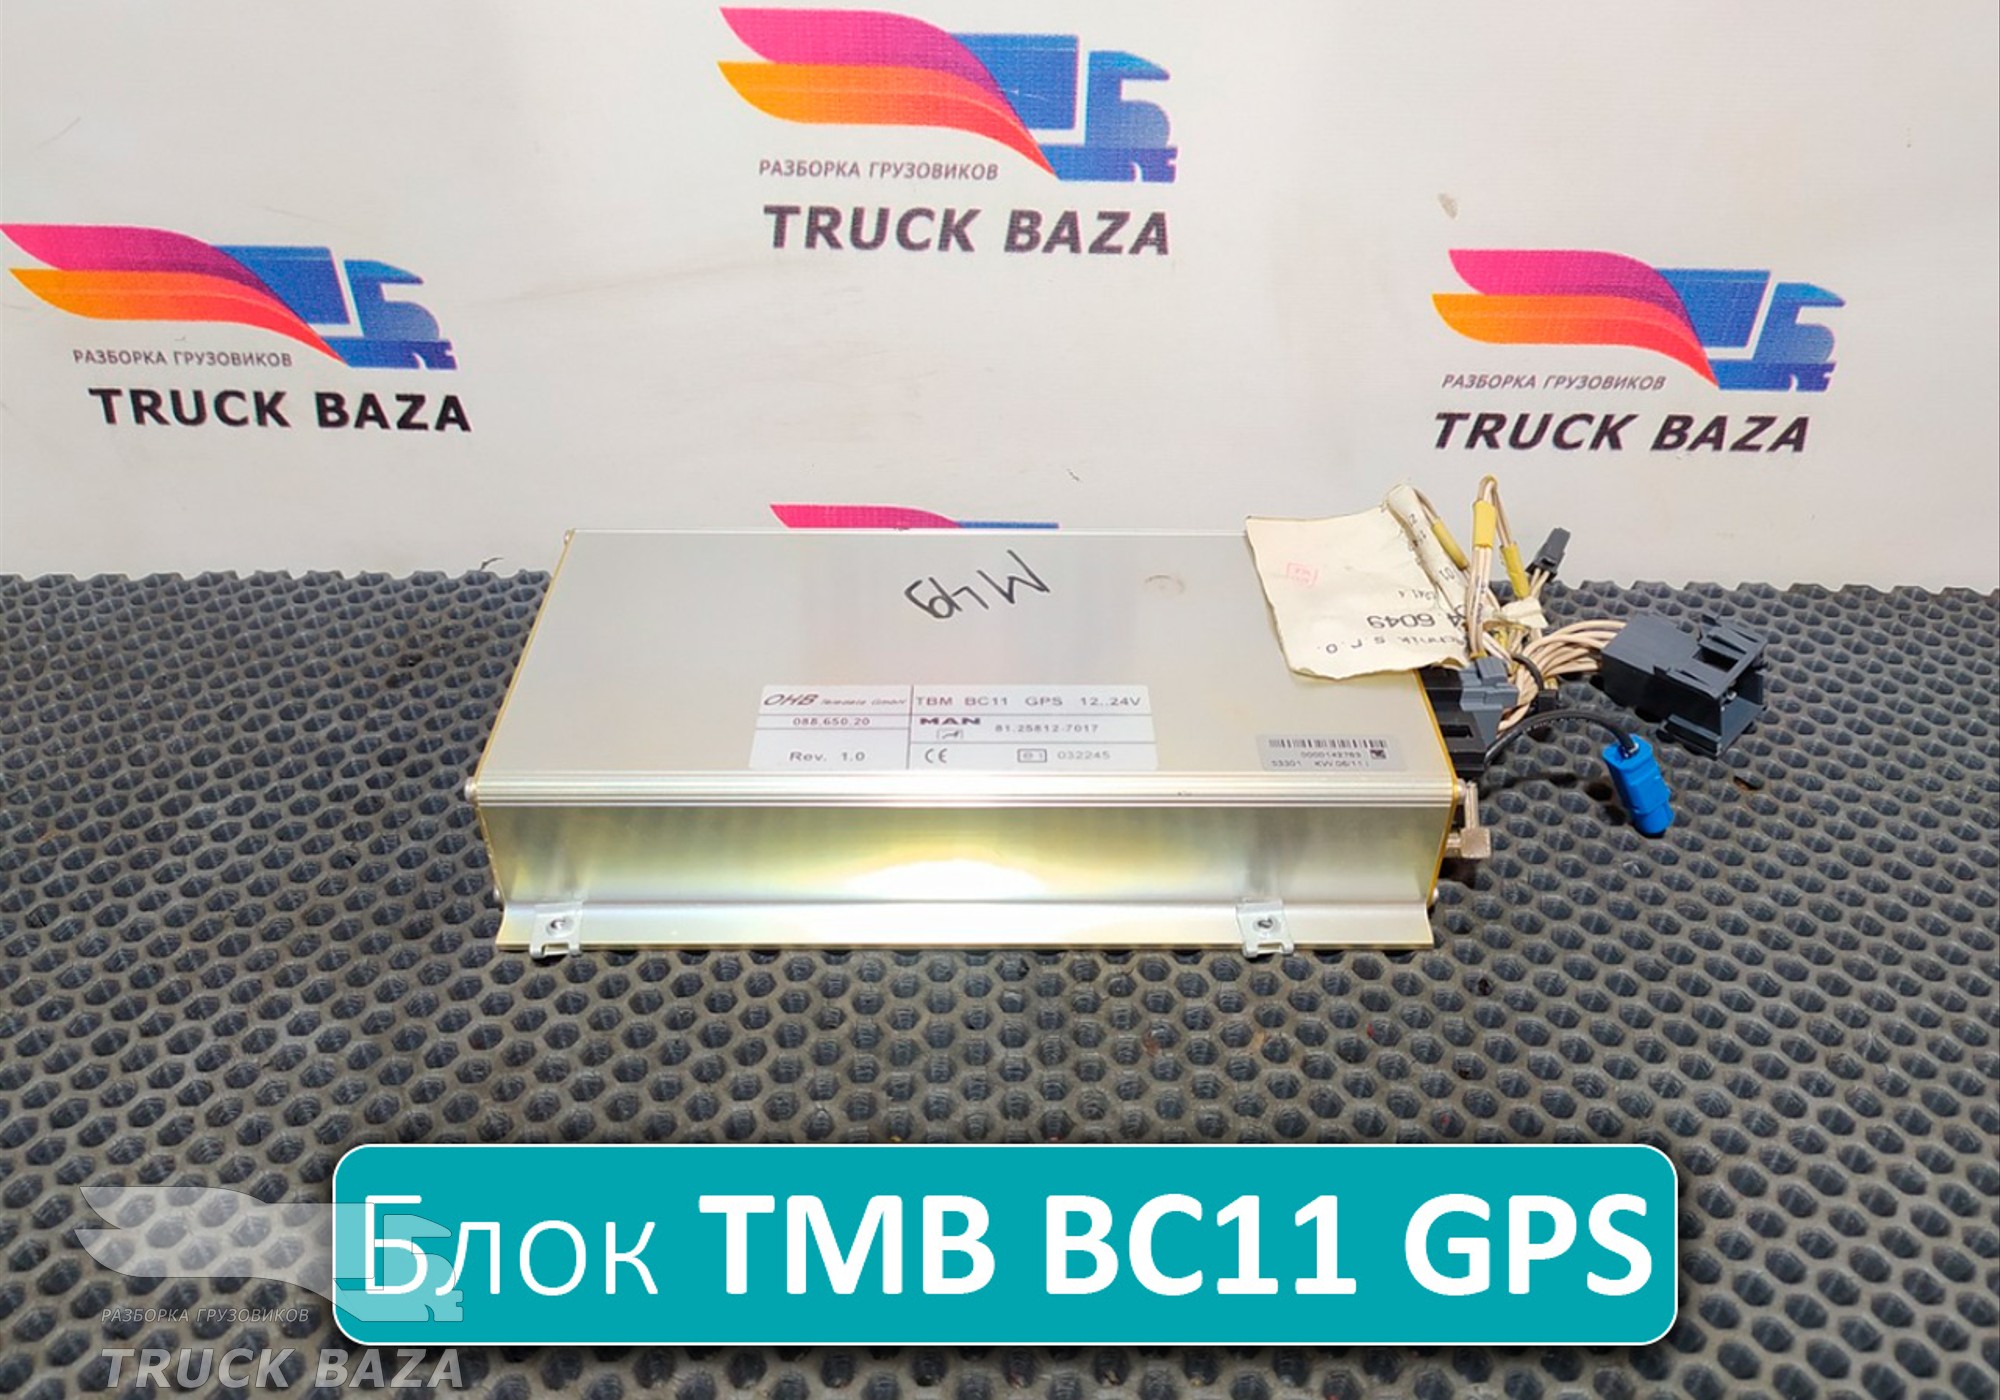 81258127017 Блок управления TMB BC11 GPS для Man TGX